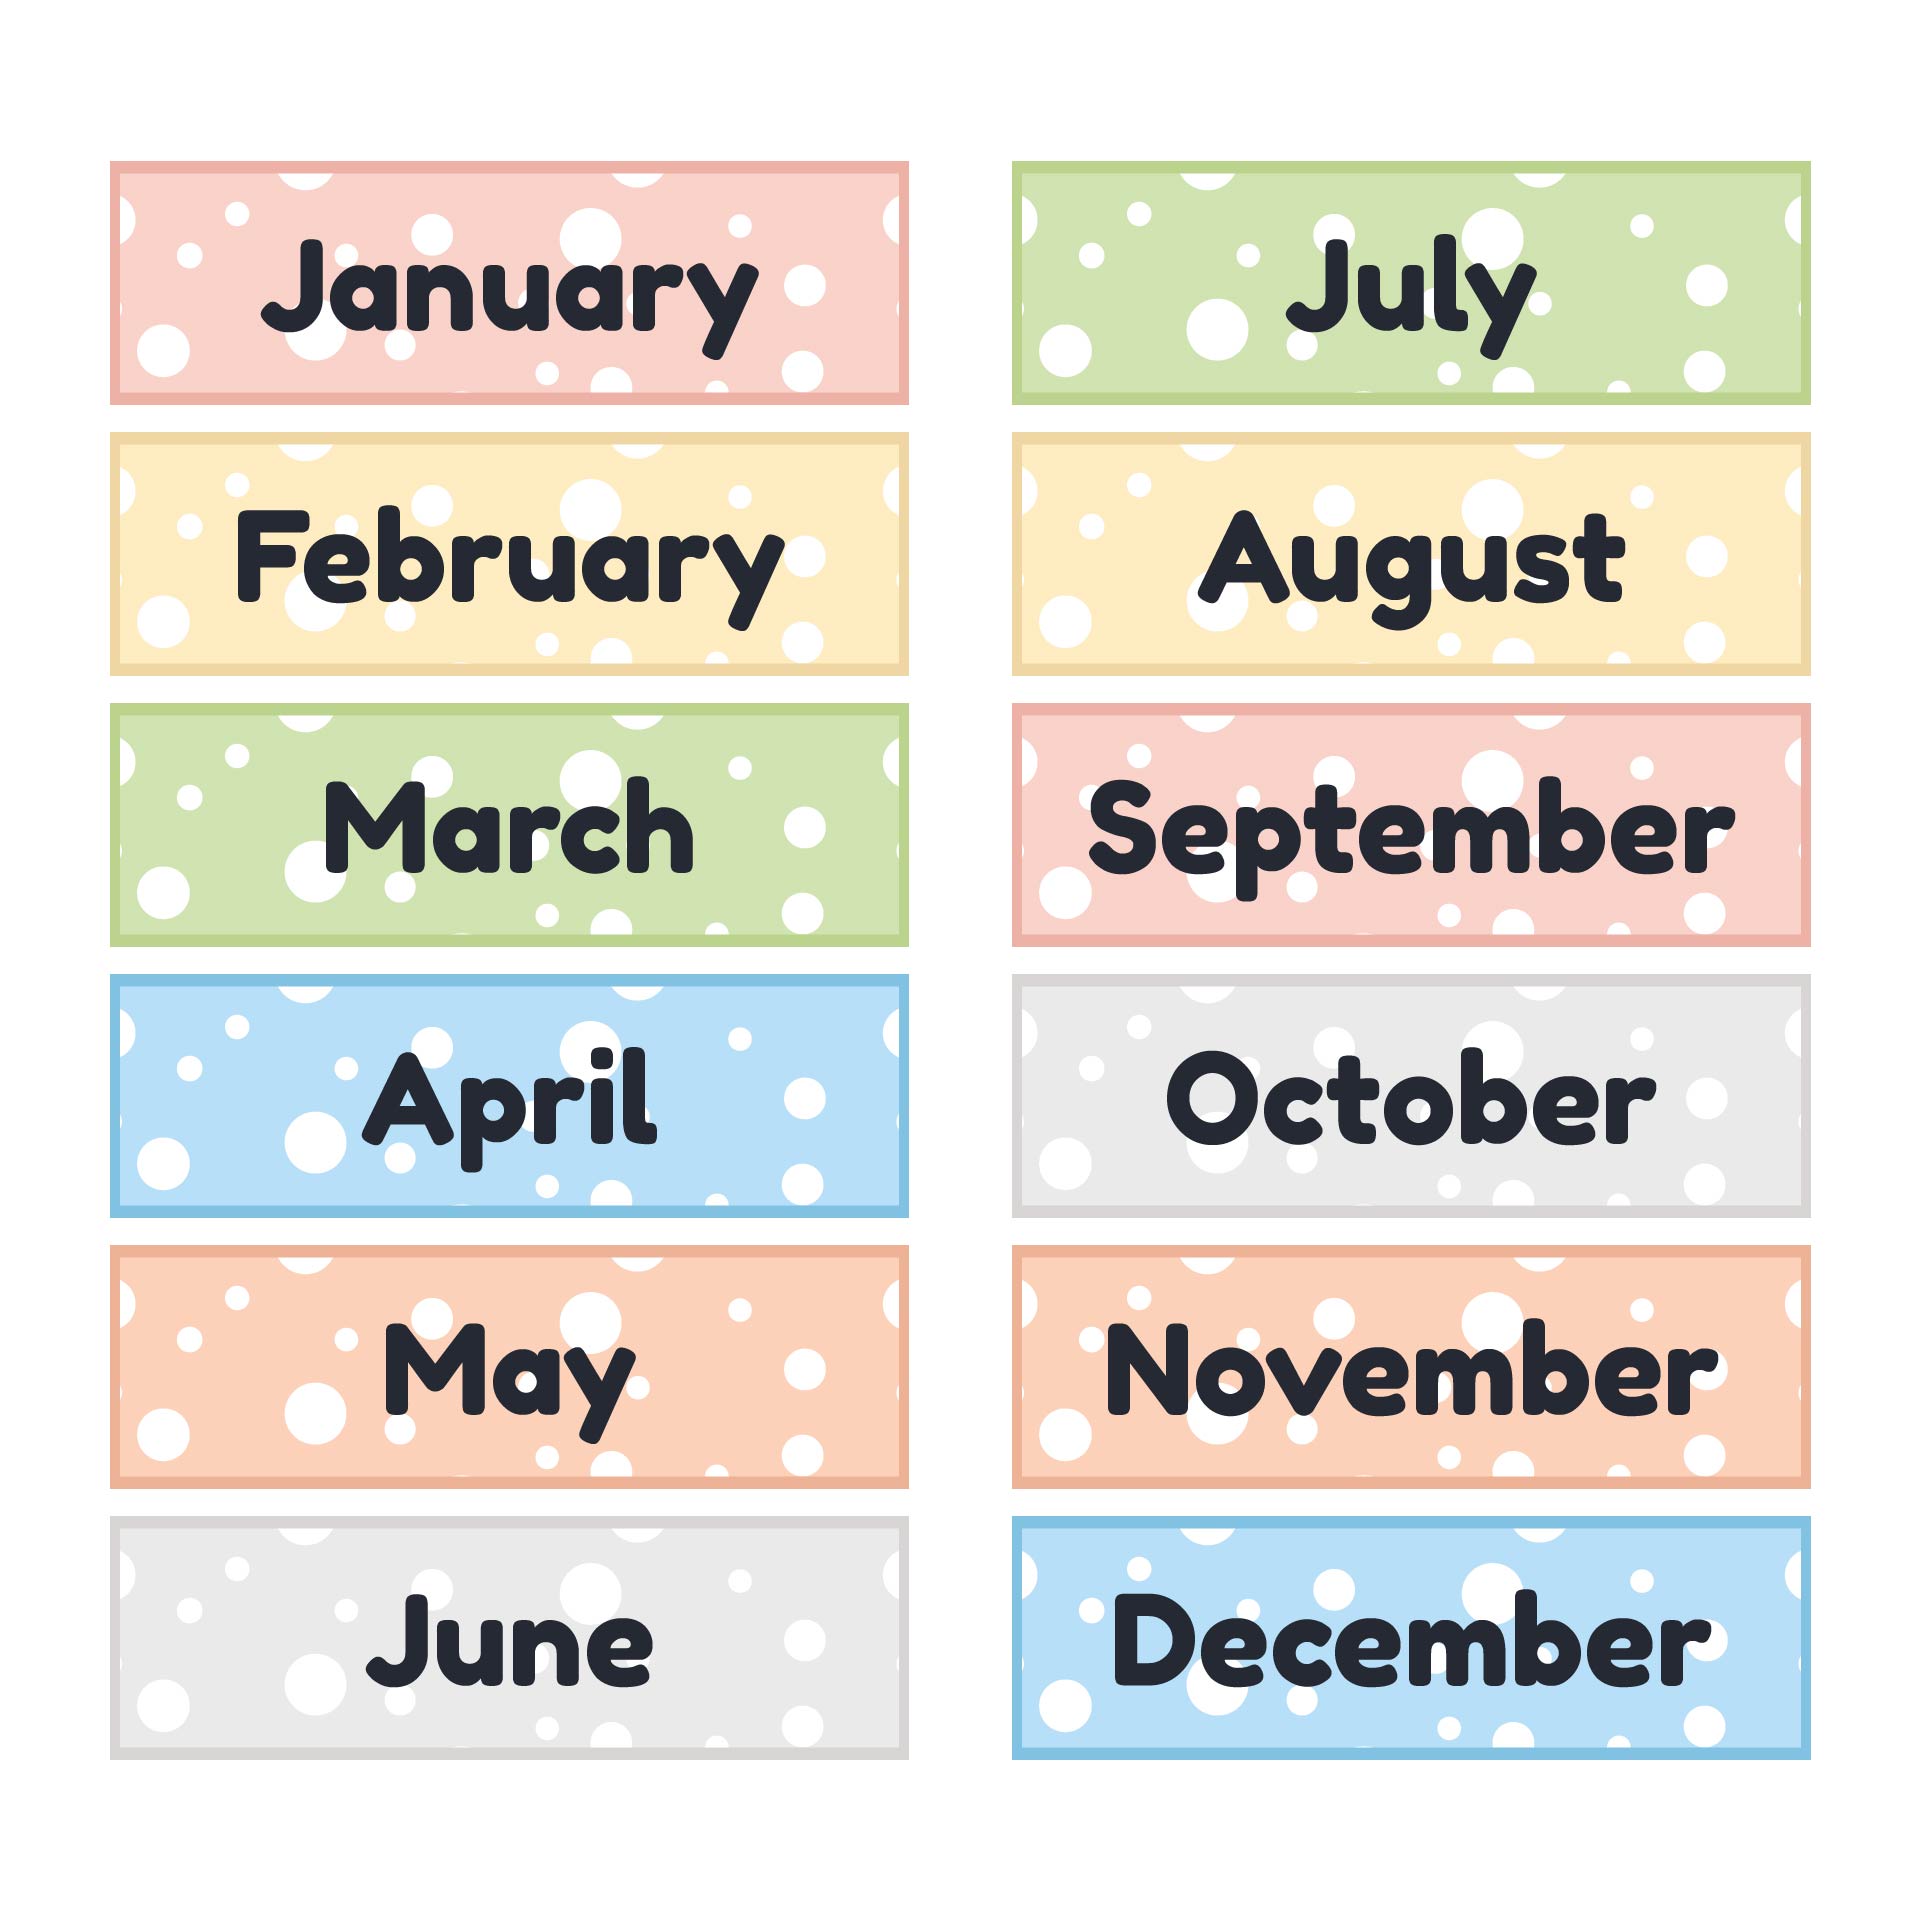 Printable Calendar Headers Months